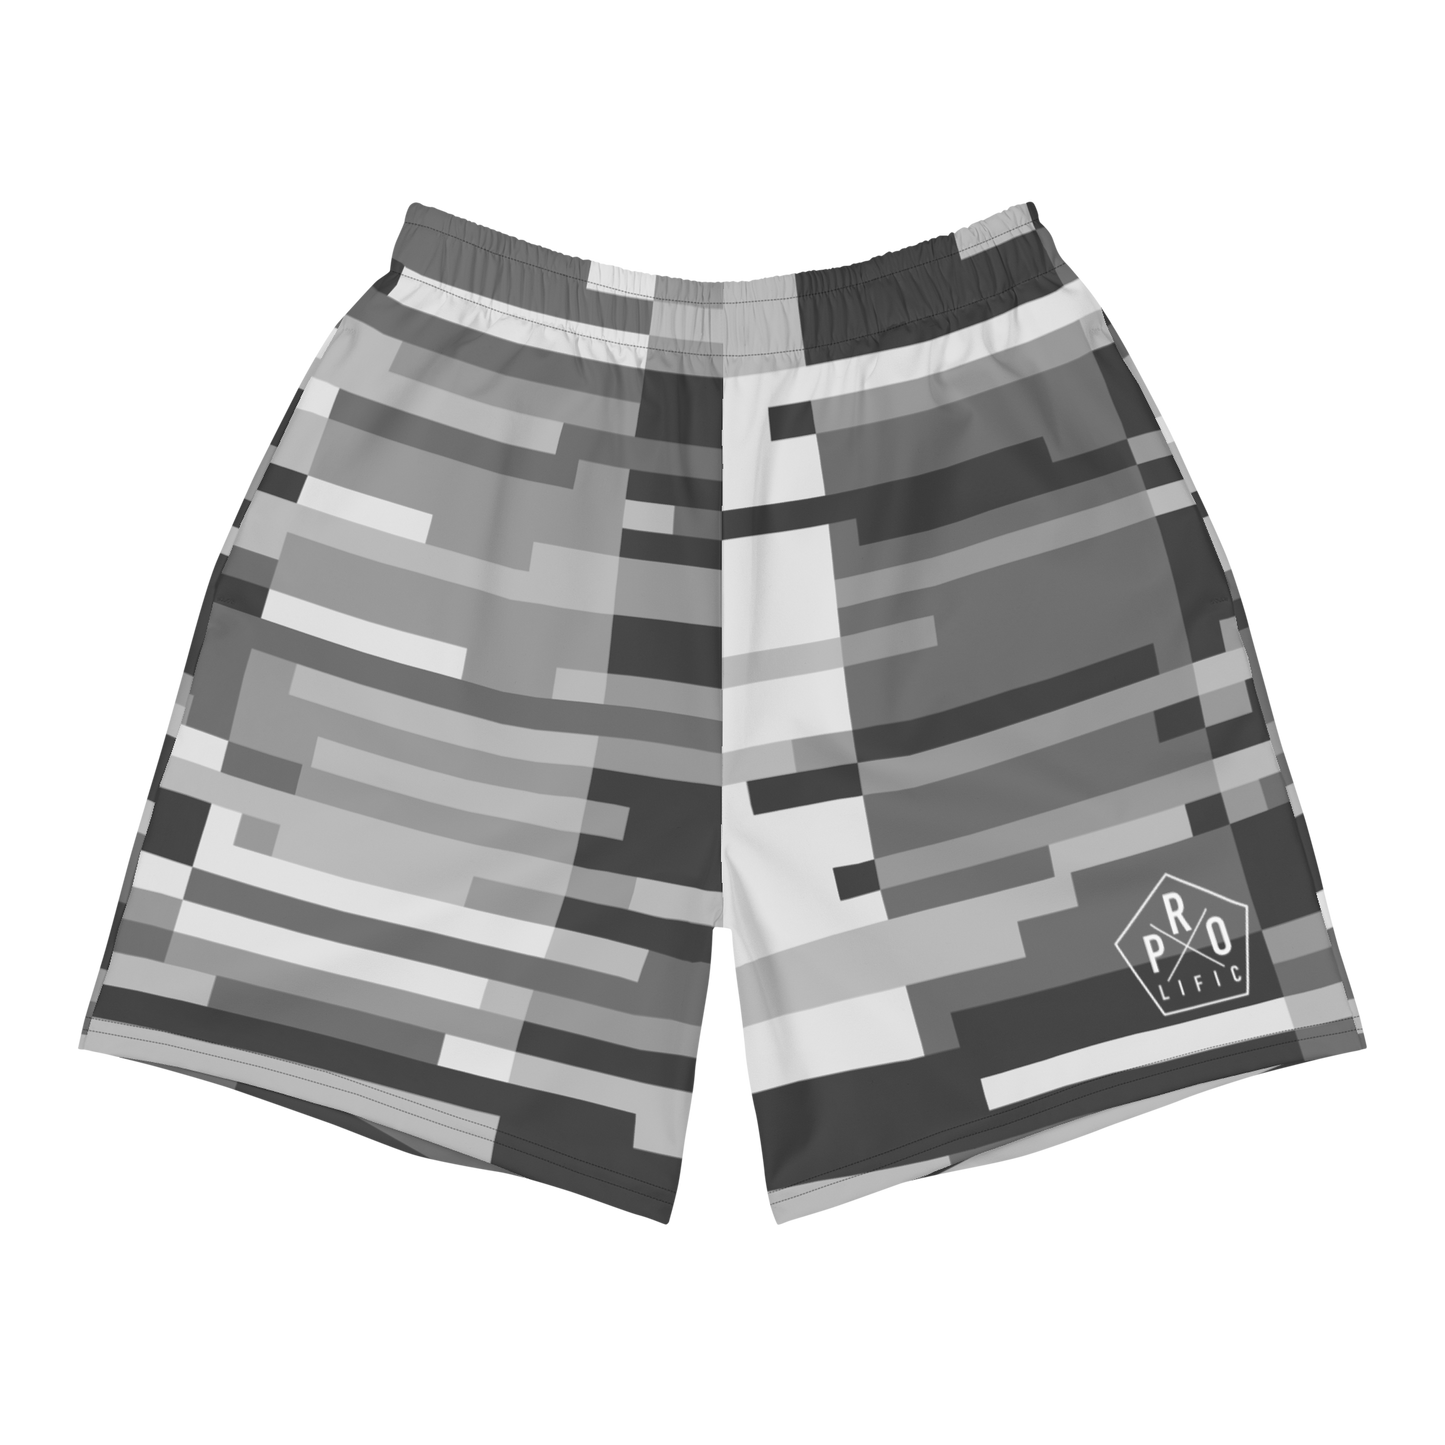 Pixel Shorts